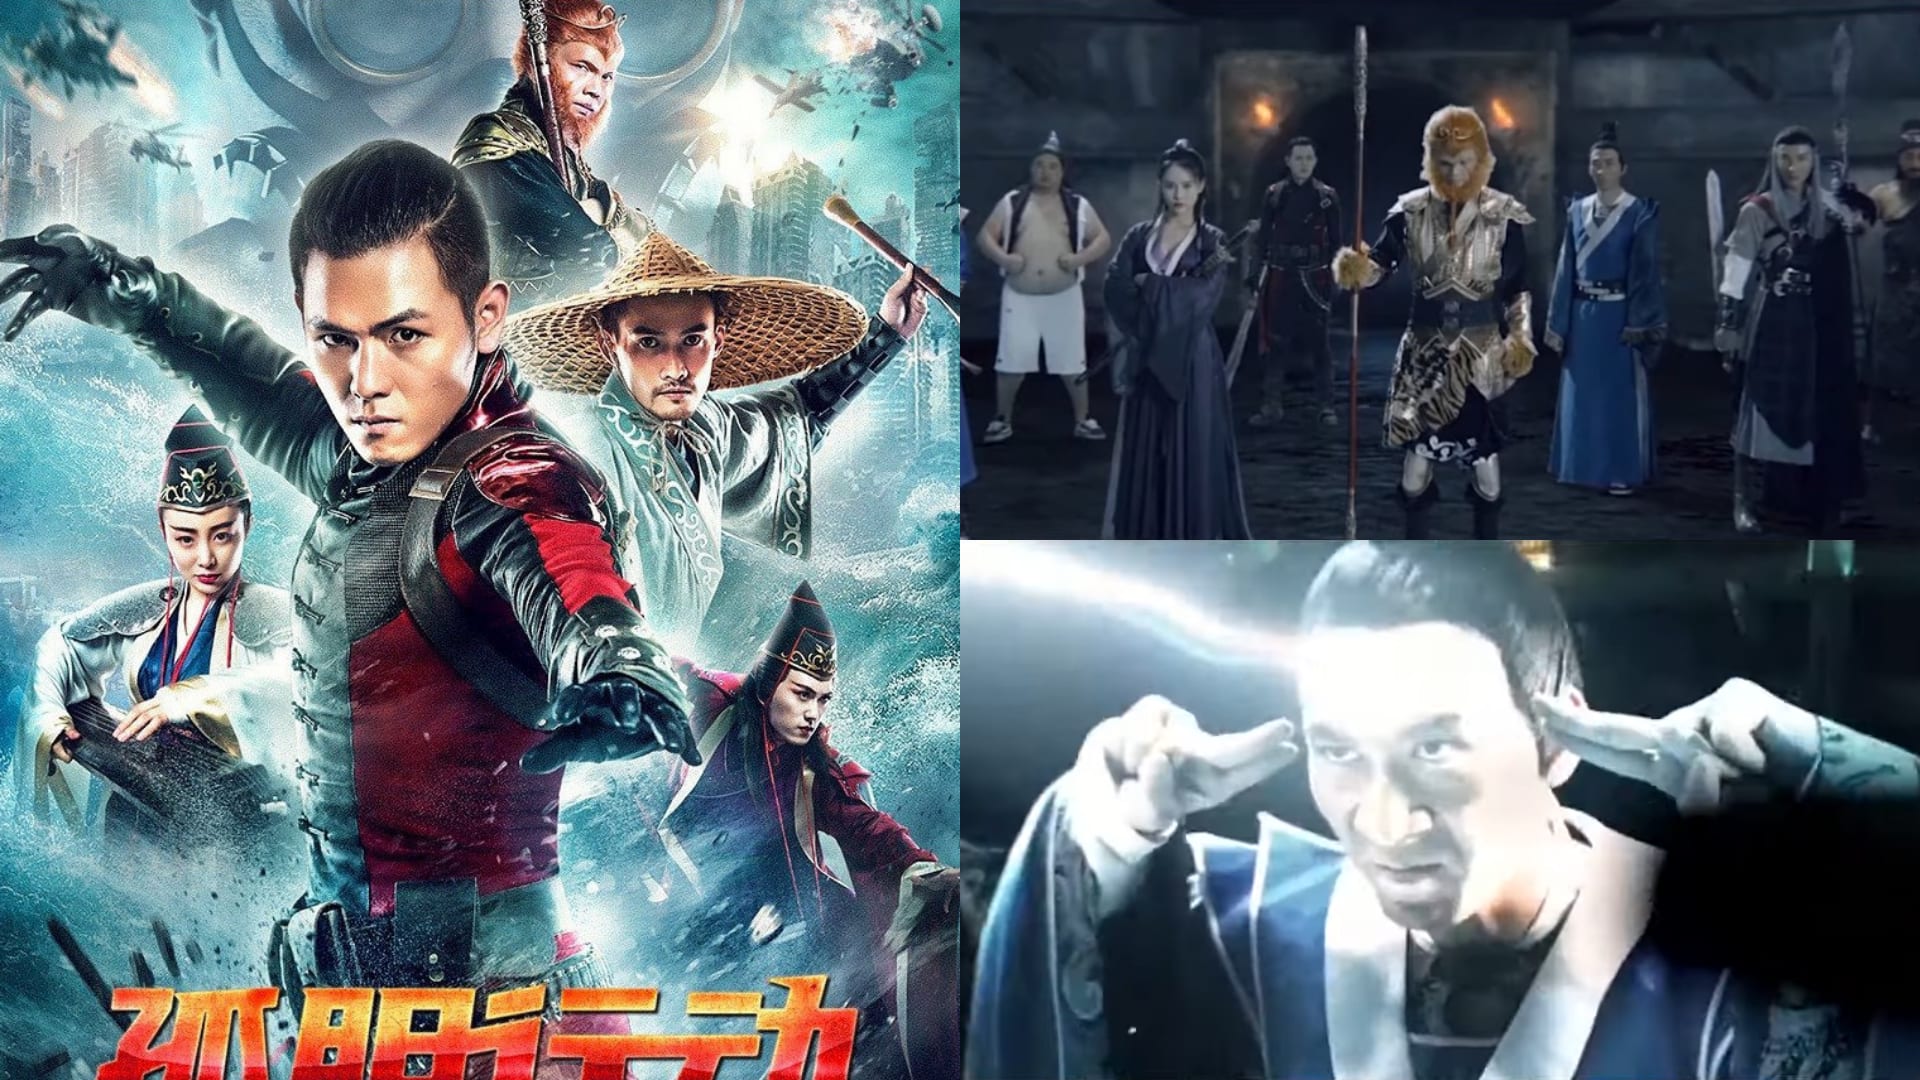 Chinese Avengers-Inspired Film China Captain Has Justice Bao, Sun Wukong & Ji Gong On The Same Superhero Team